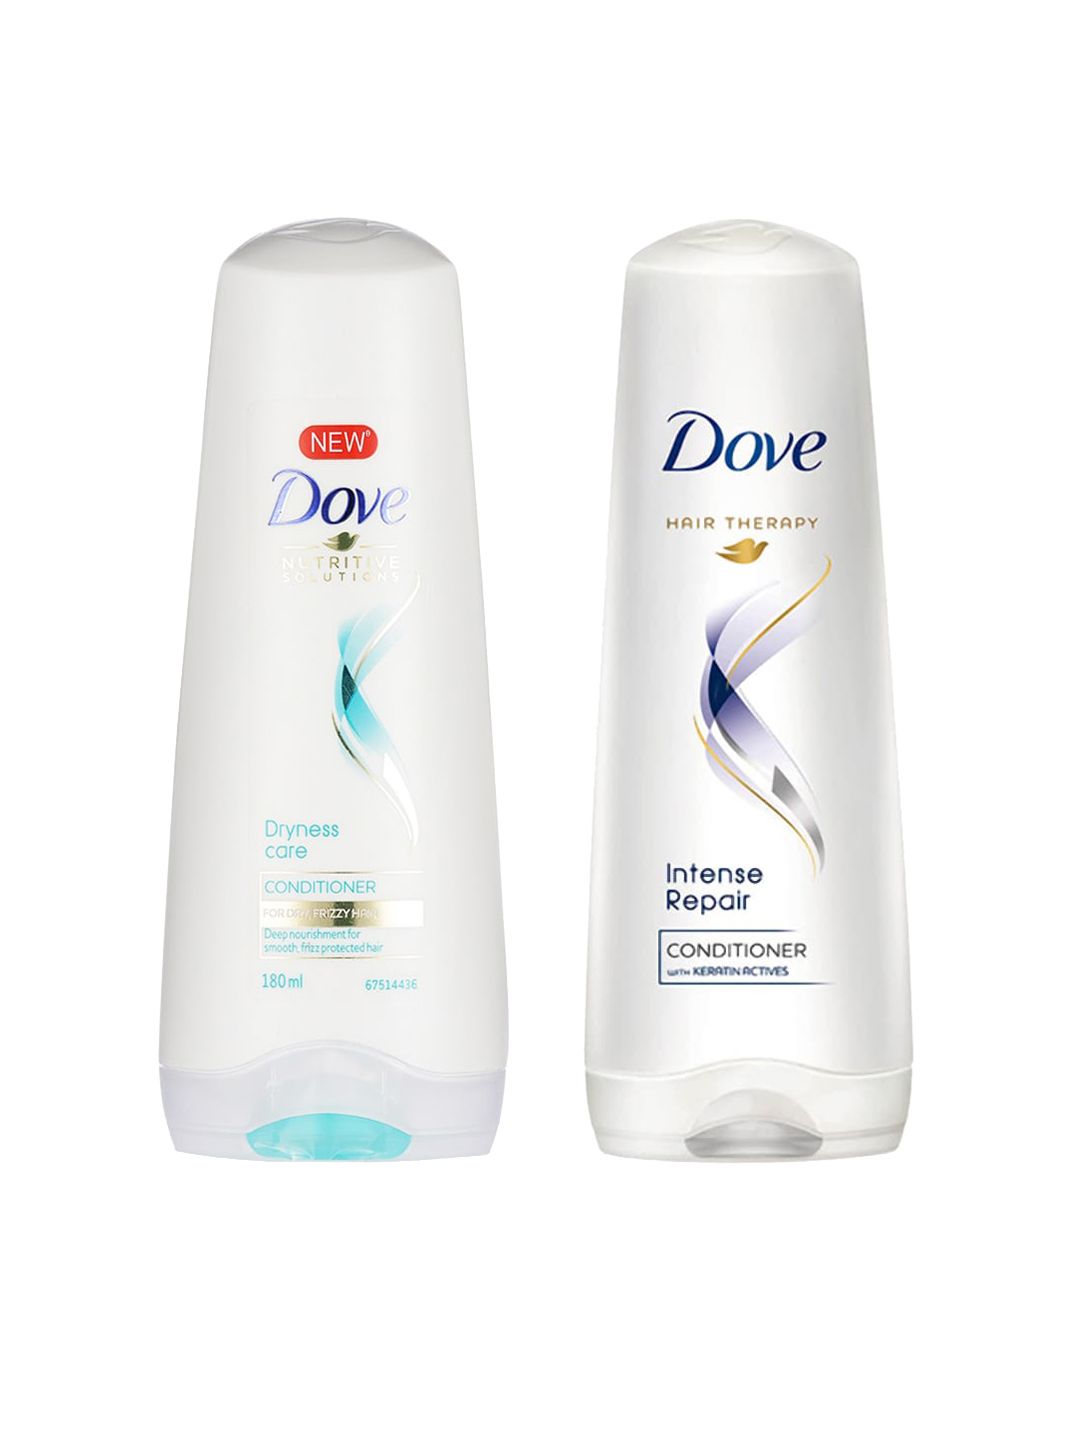 Dove Unisex Intense Repair Conditioner & Hair Therapy Dryness Care Conditioner Price in India